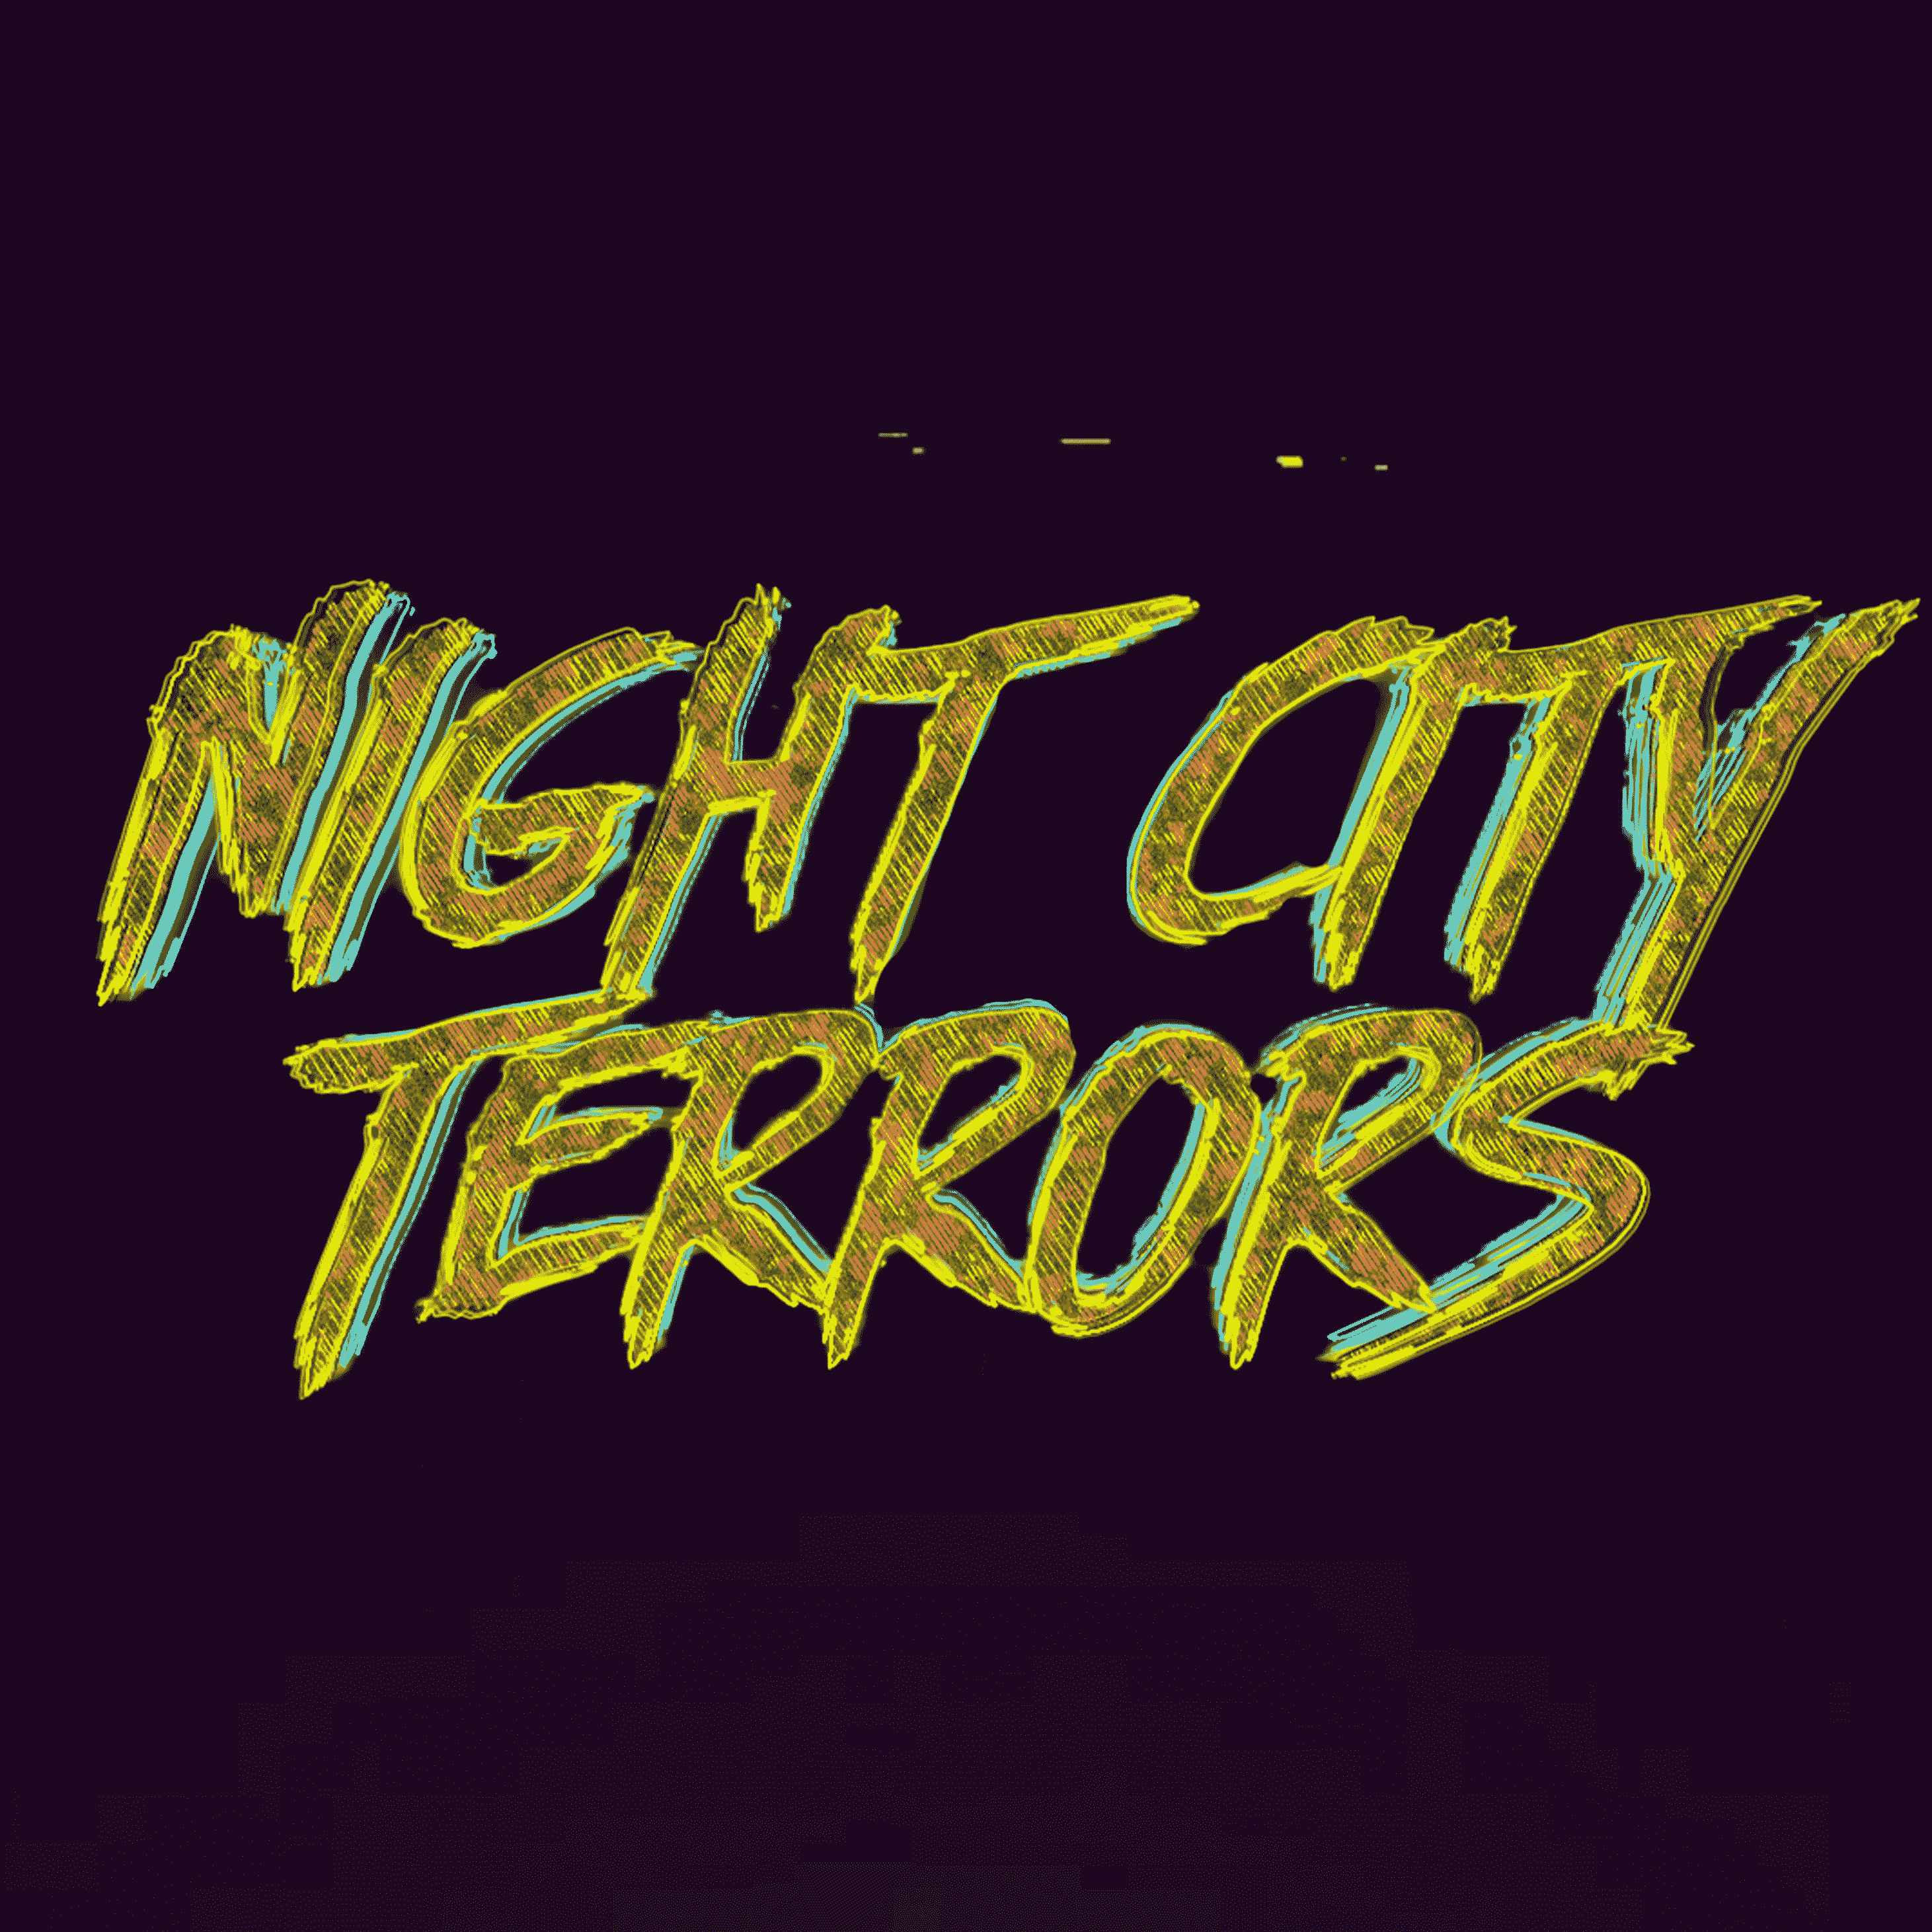 Night City Terrors